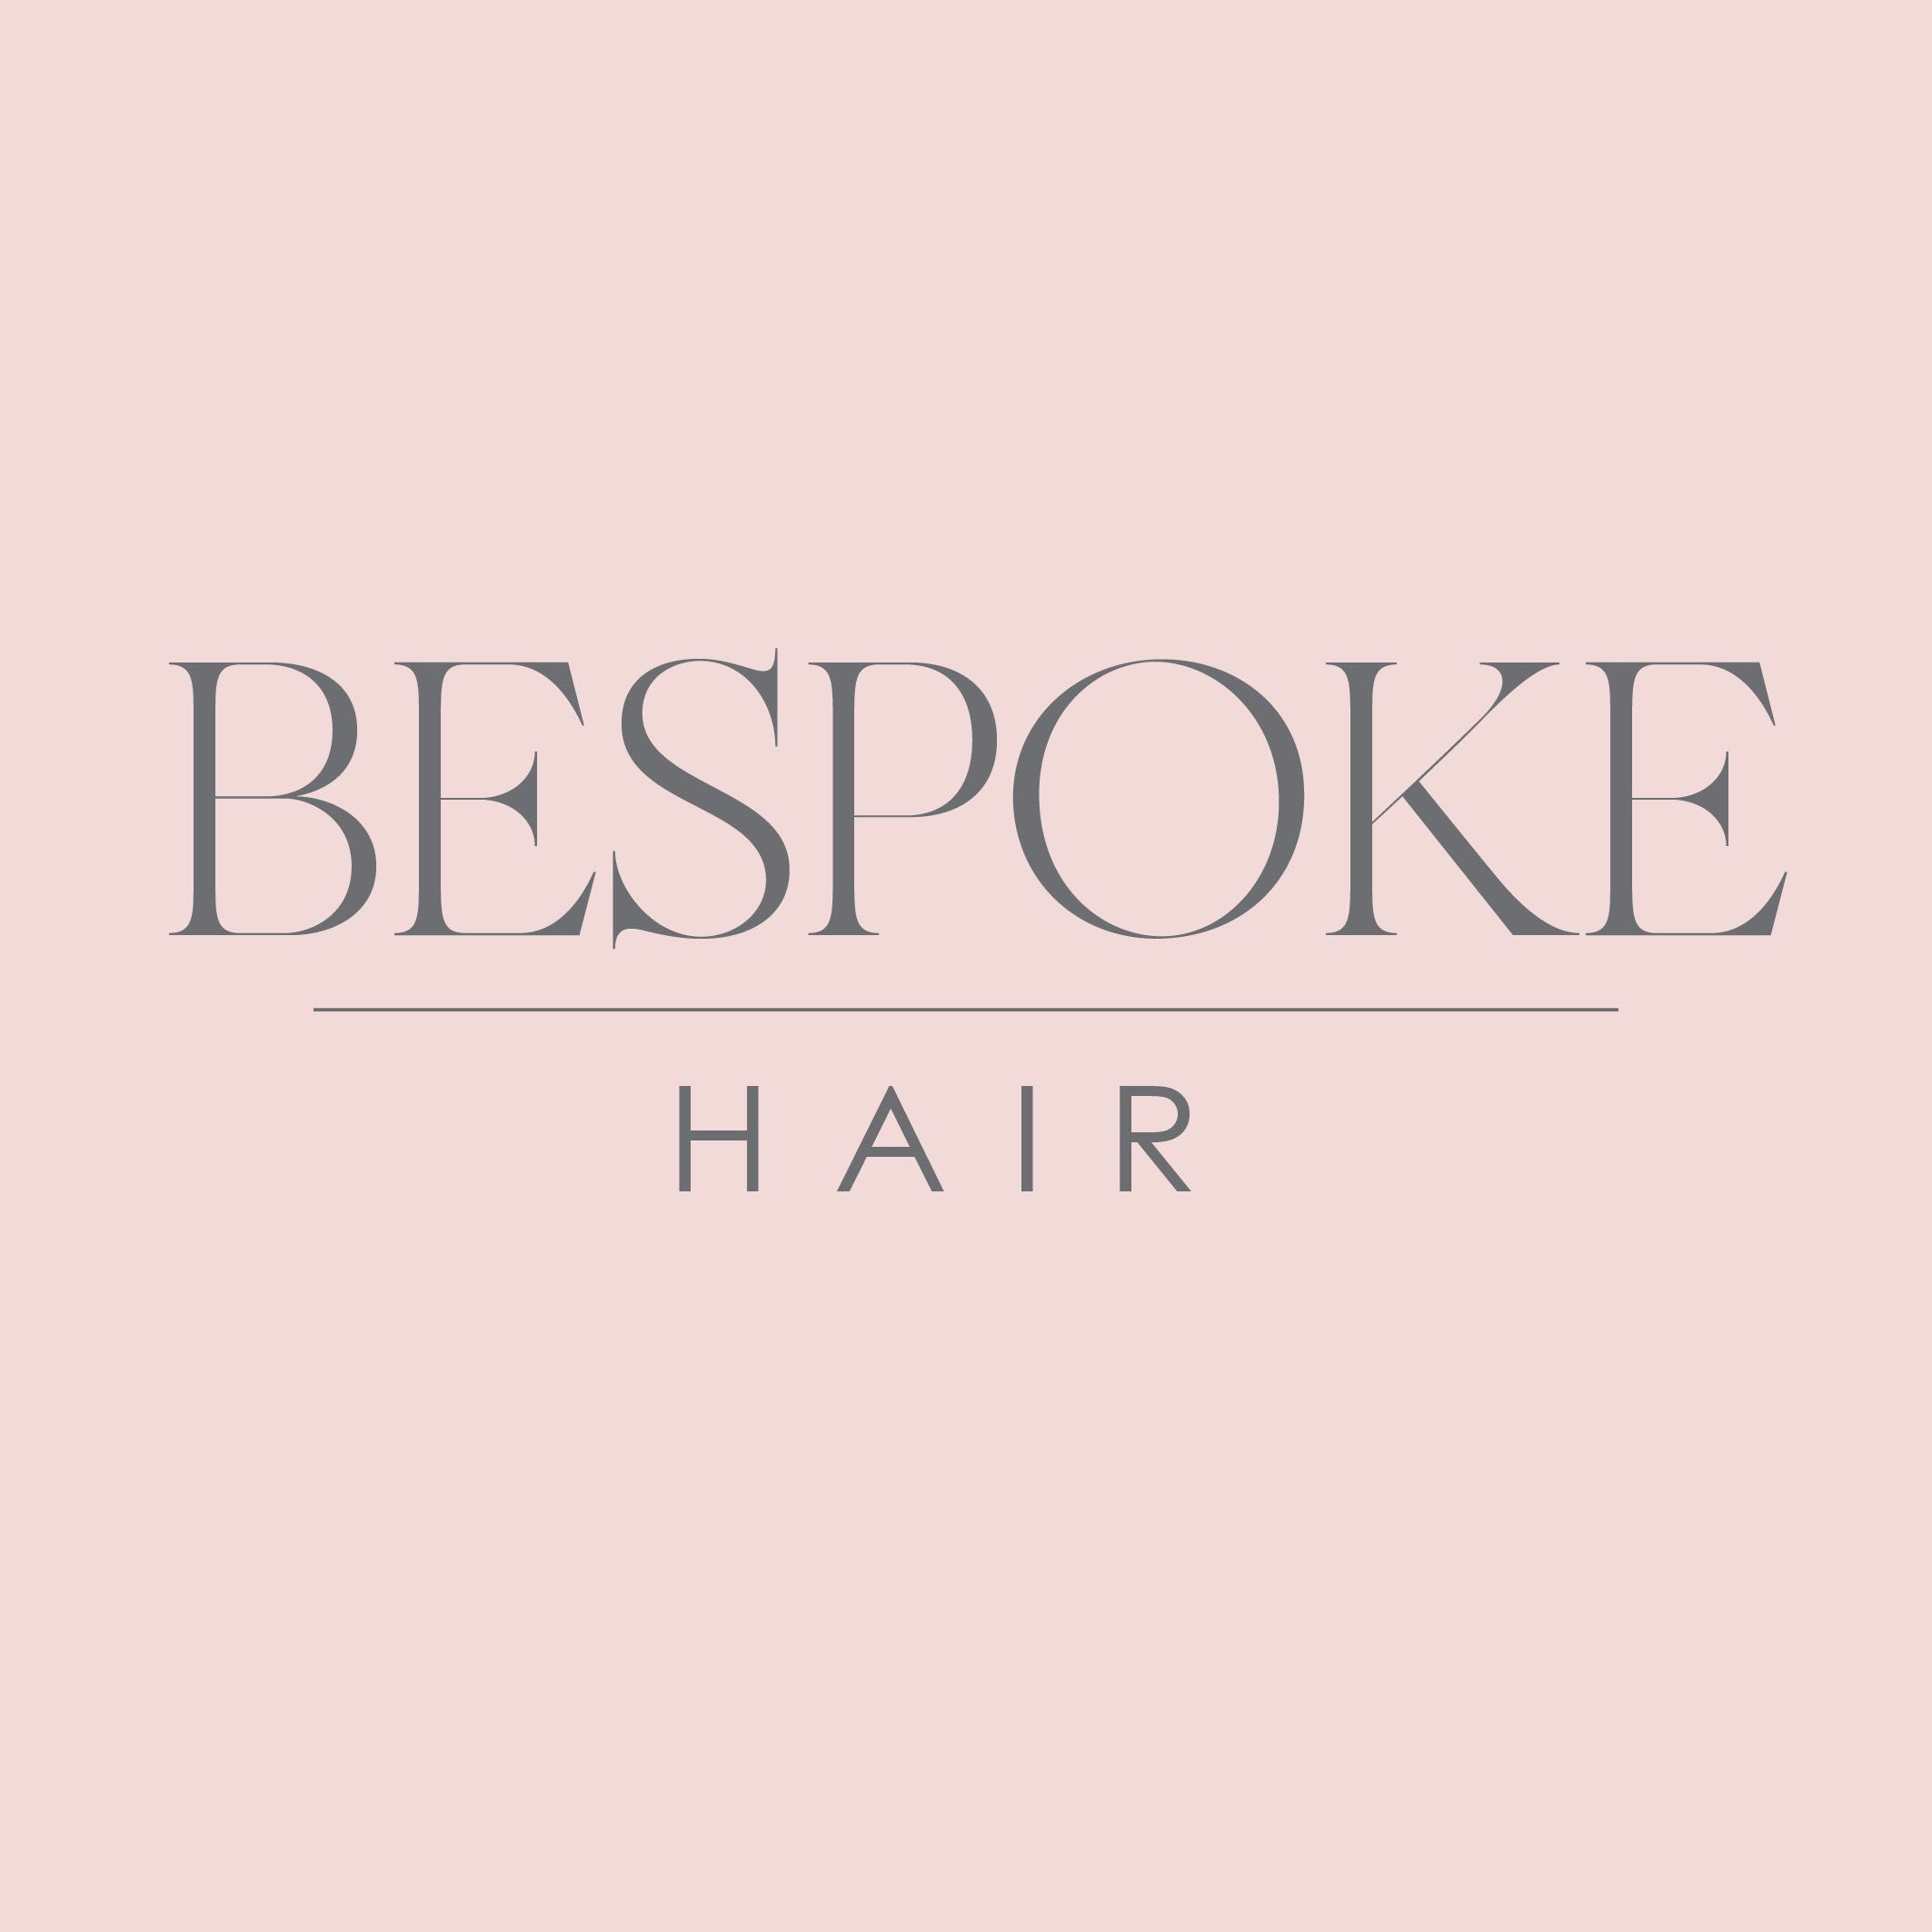 Bespoke Hair, Bespoke Hair, Station Hill, CF31 1EA, Bridgend